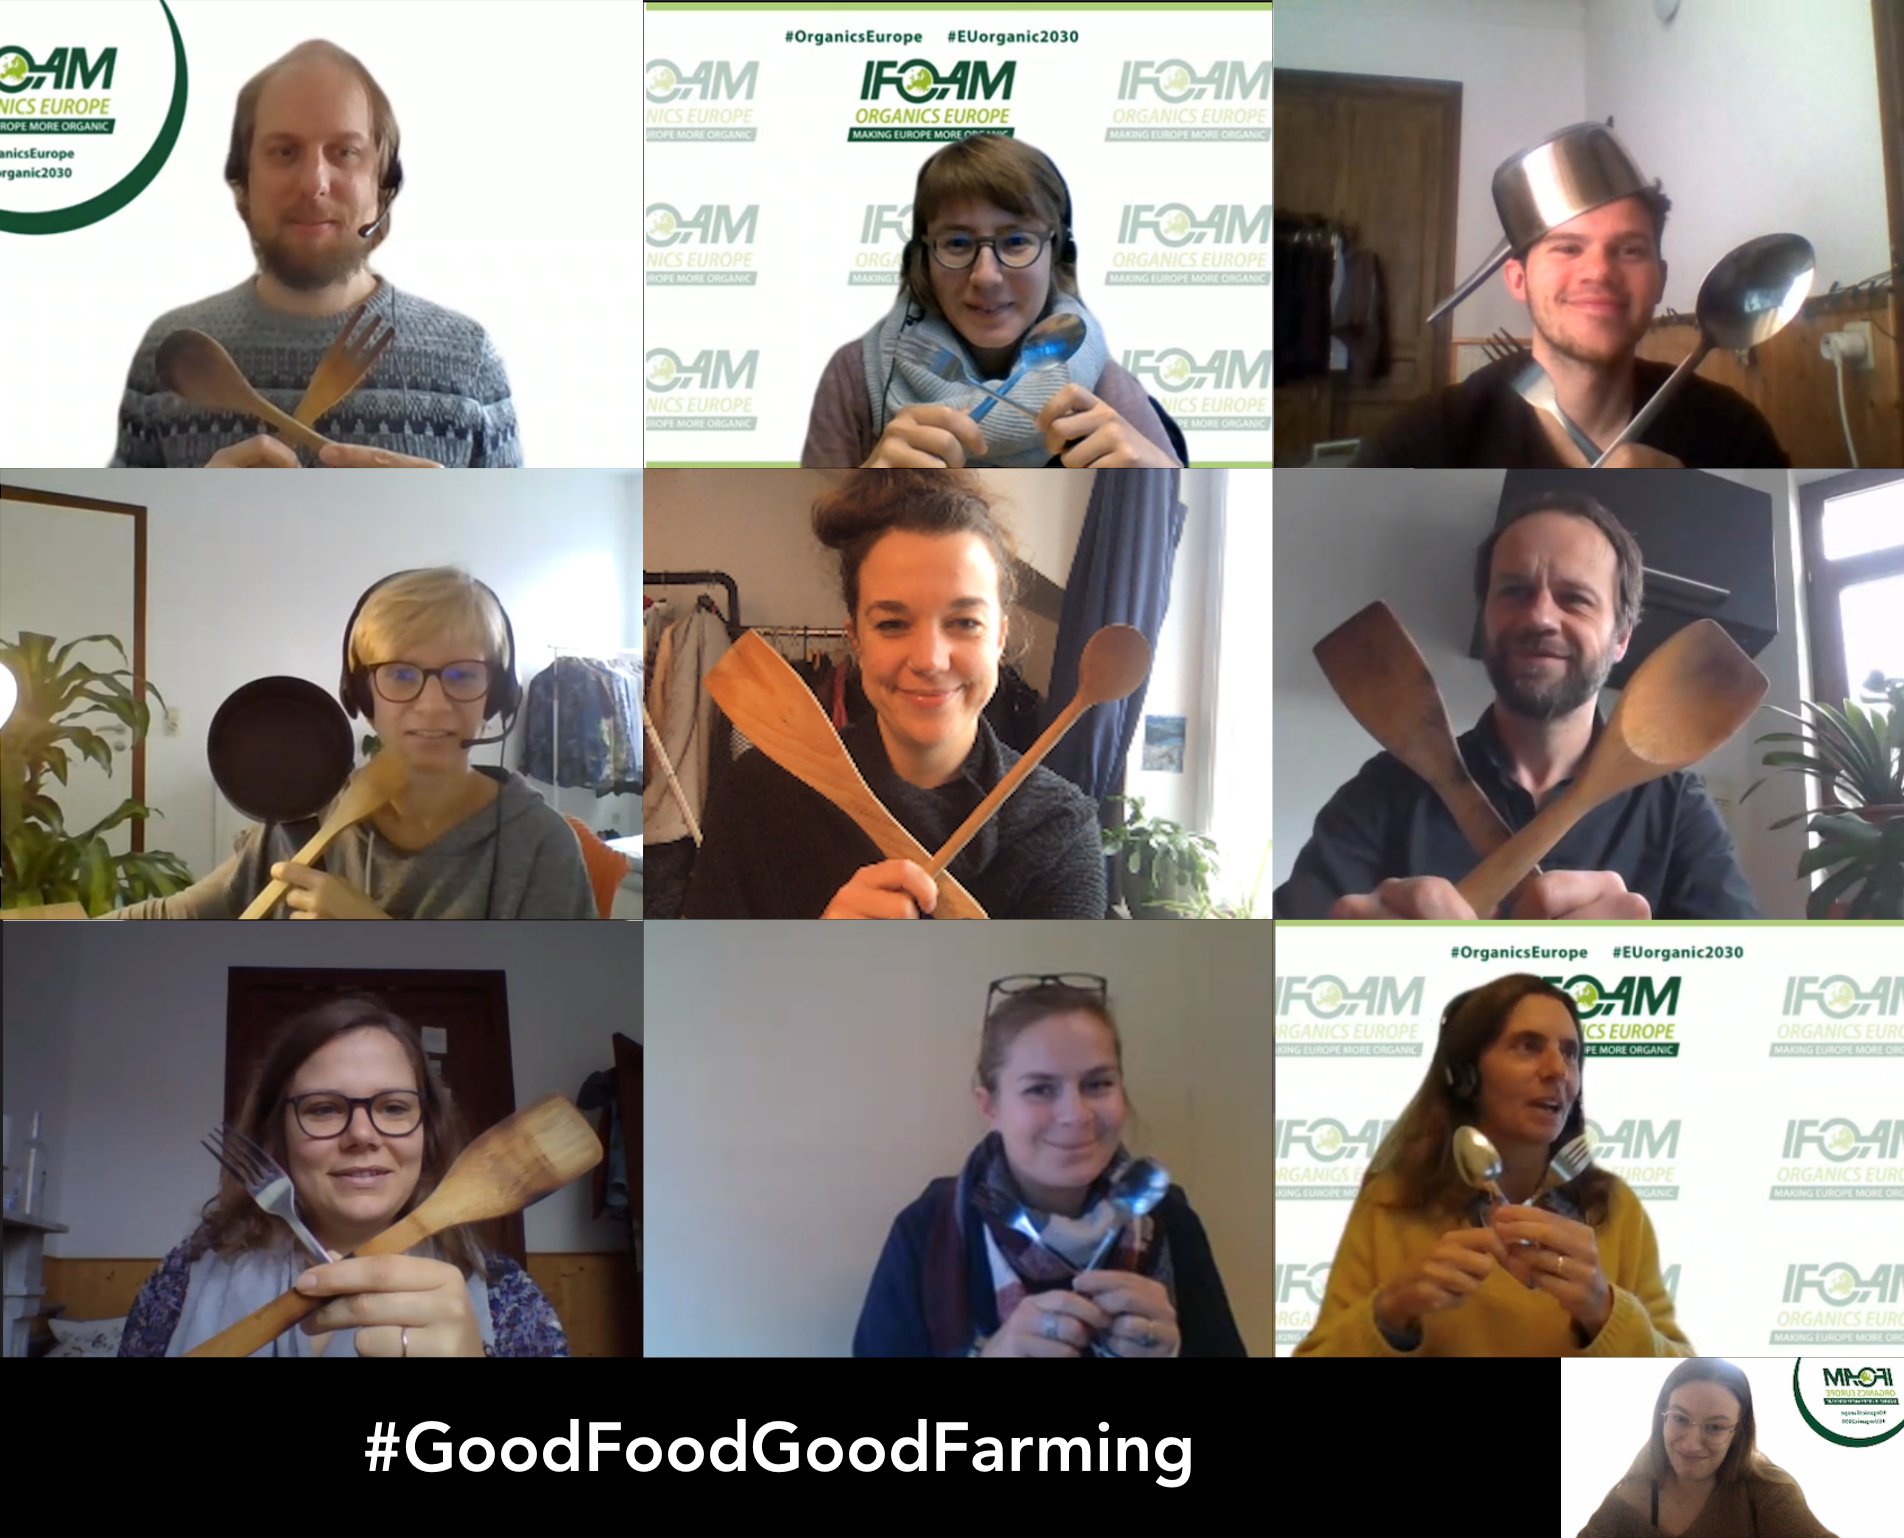 IFOAM Organics Europe taking part in #GoodFoodGoodFarming social media campaign